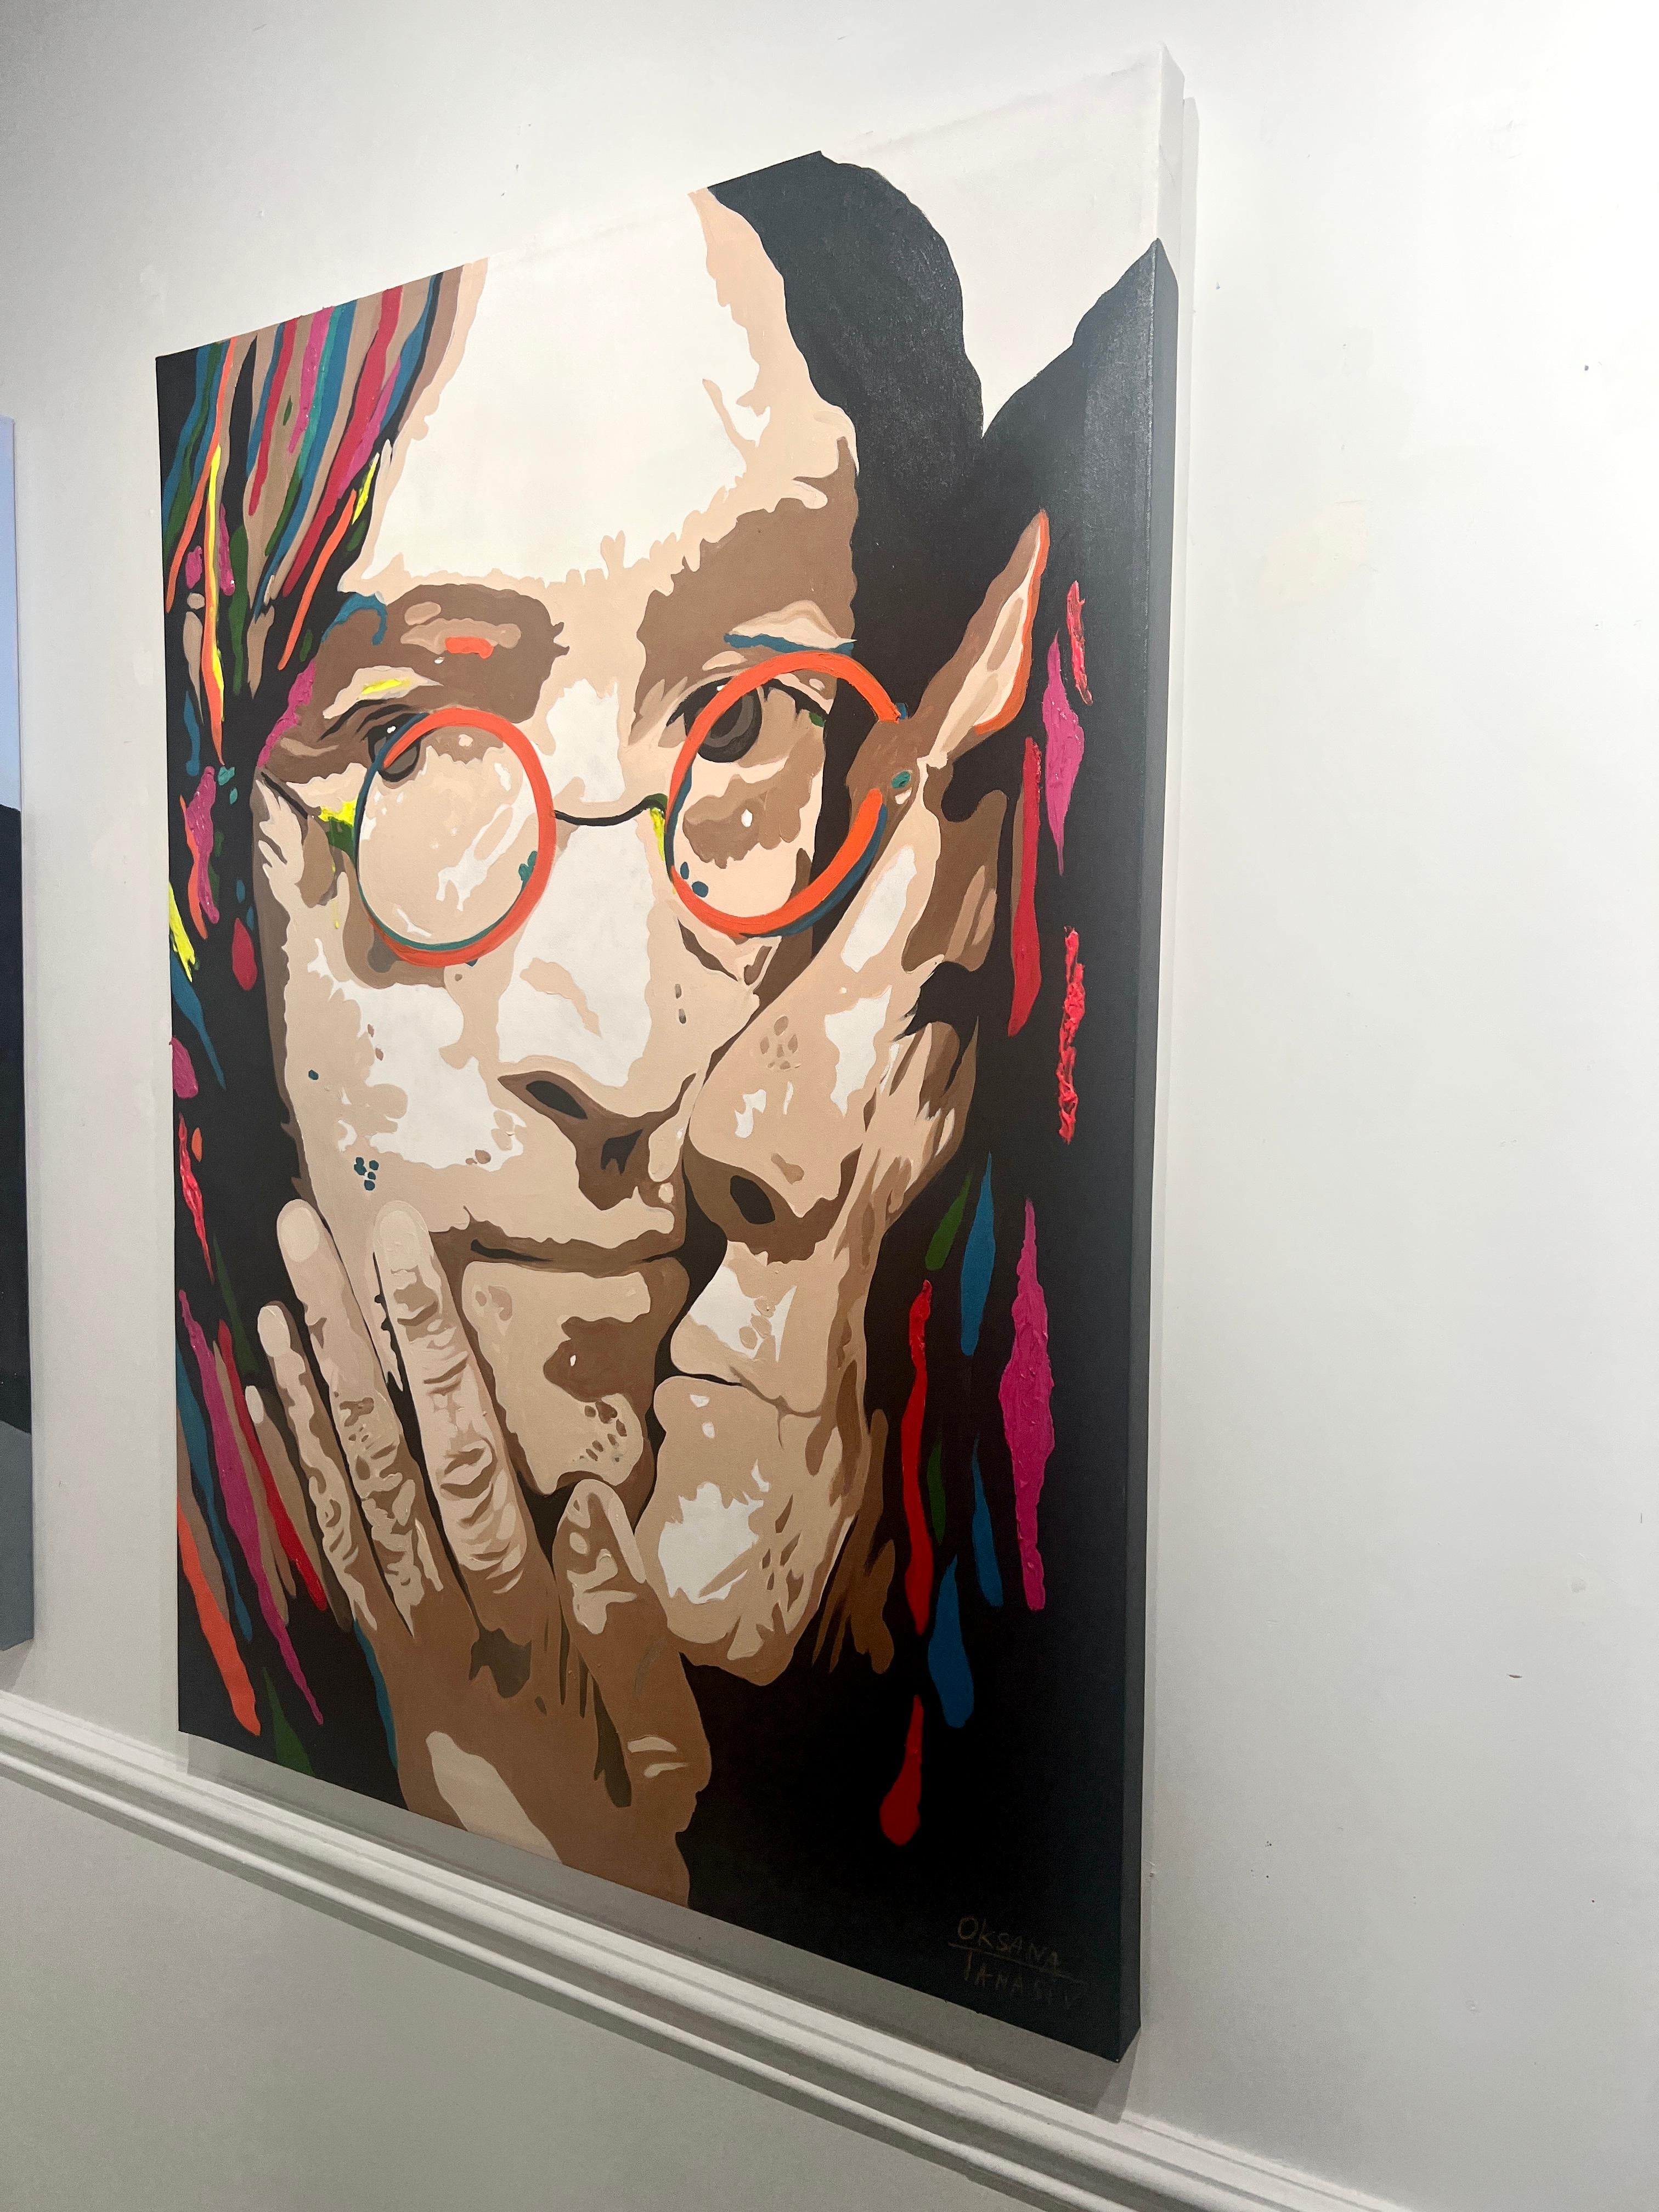 John Lennon und Yoko Ono, Prominente Porträts von Persönlichkeiten, Pop Art (Pop-Art), Painting, von Oksana Tanasiv